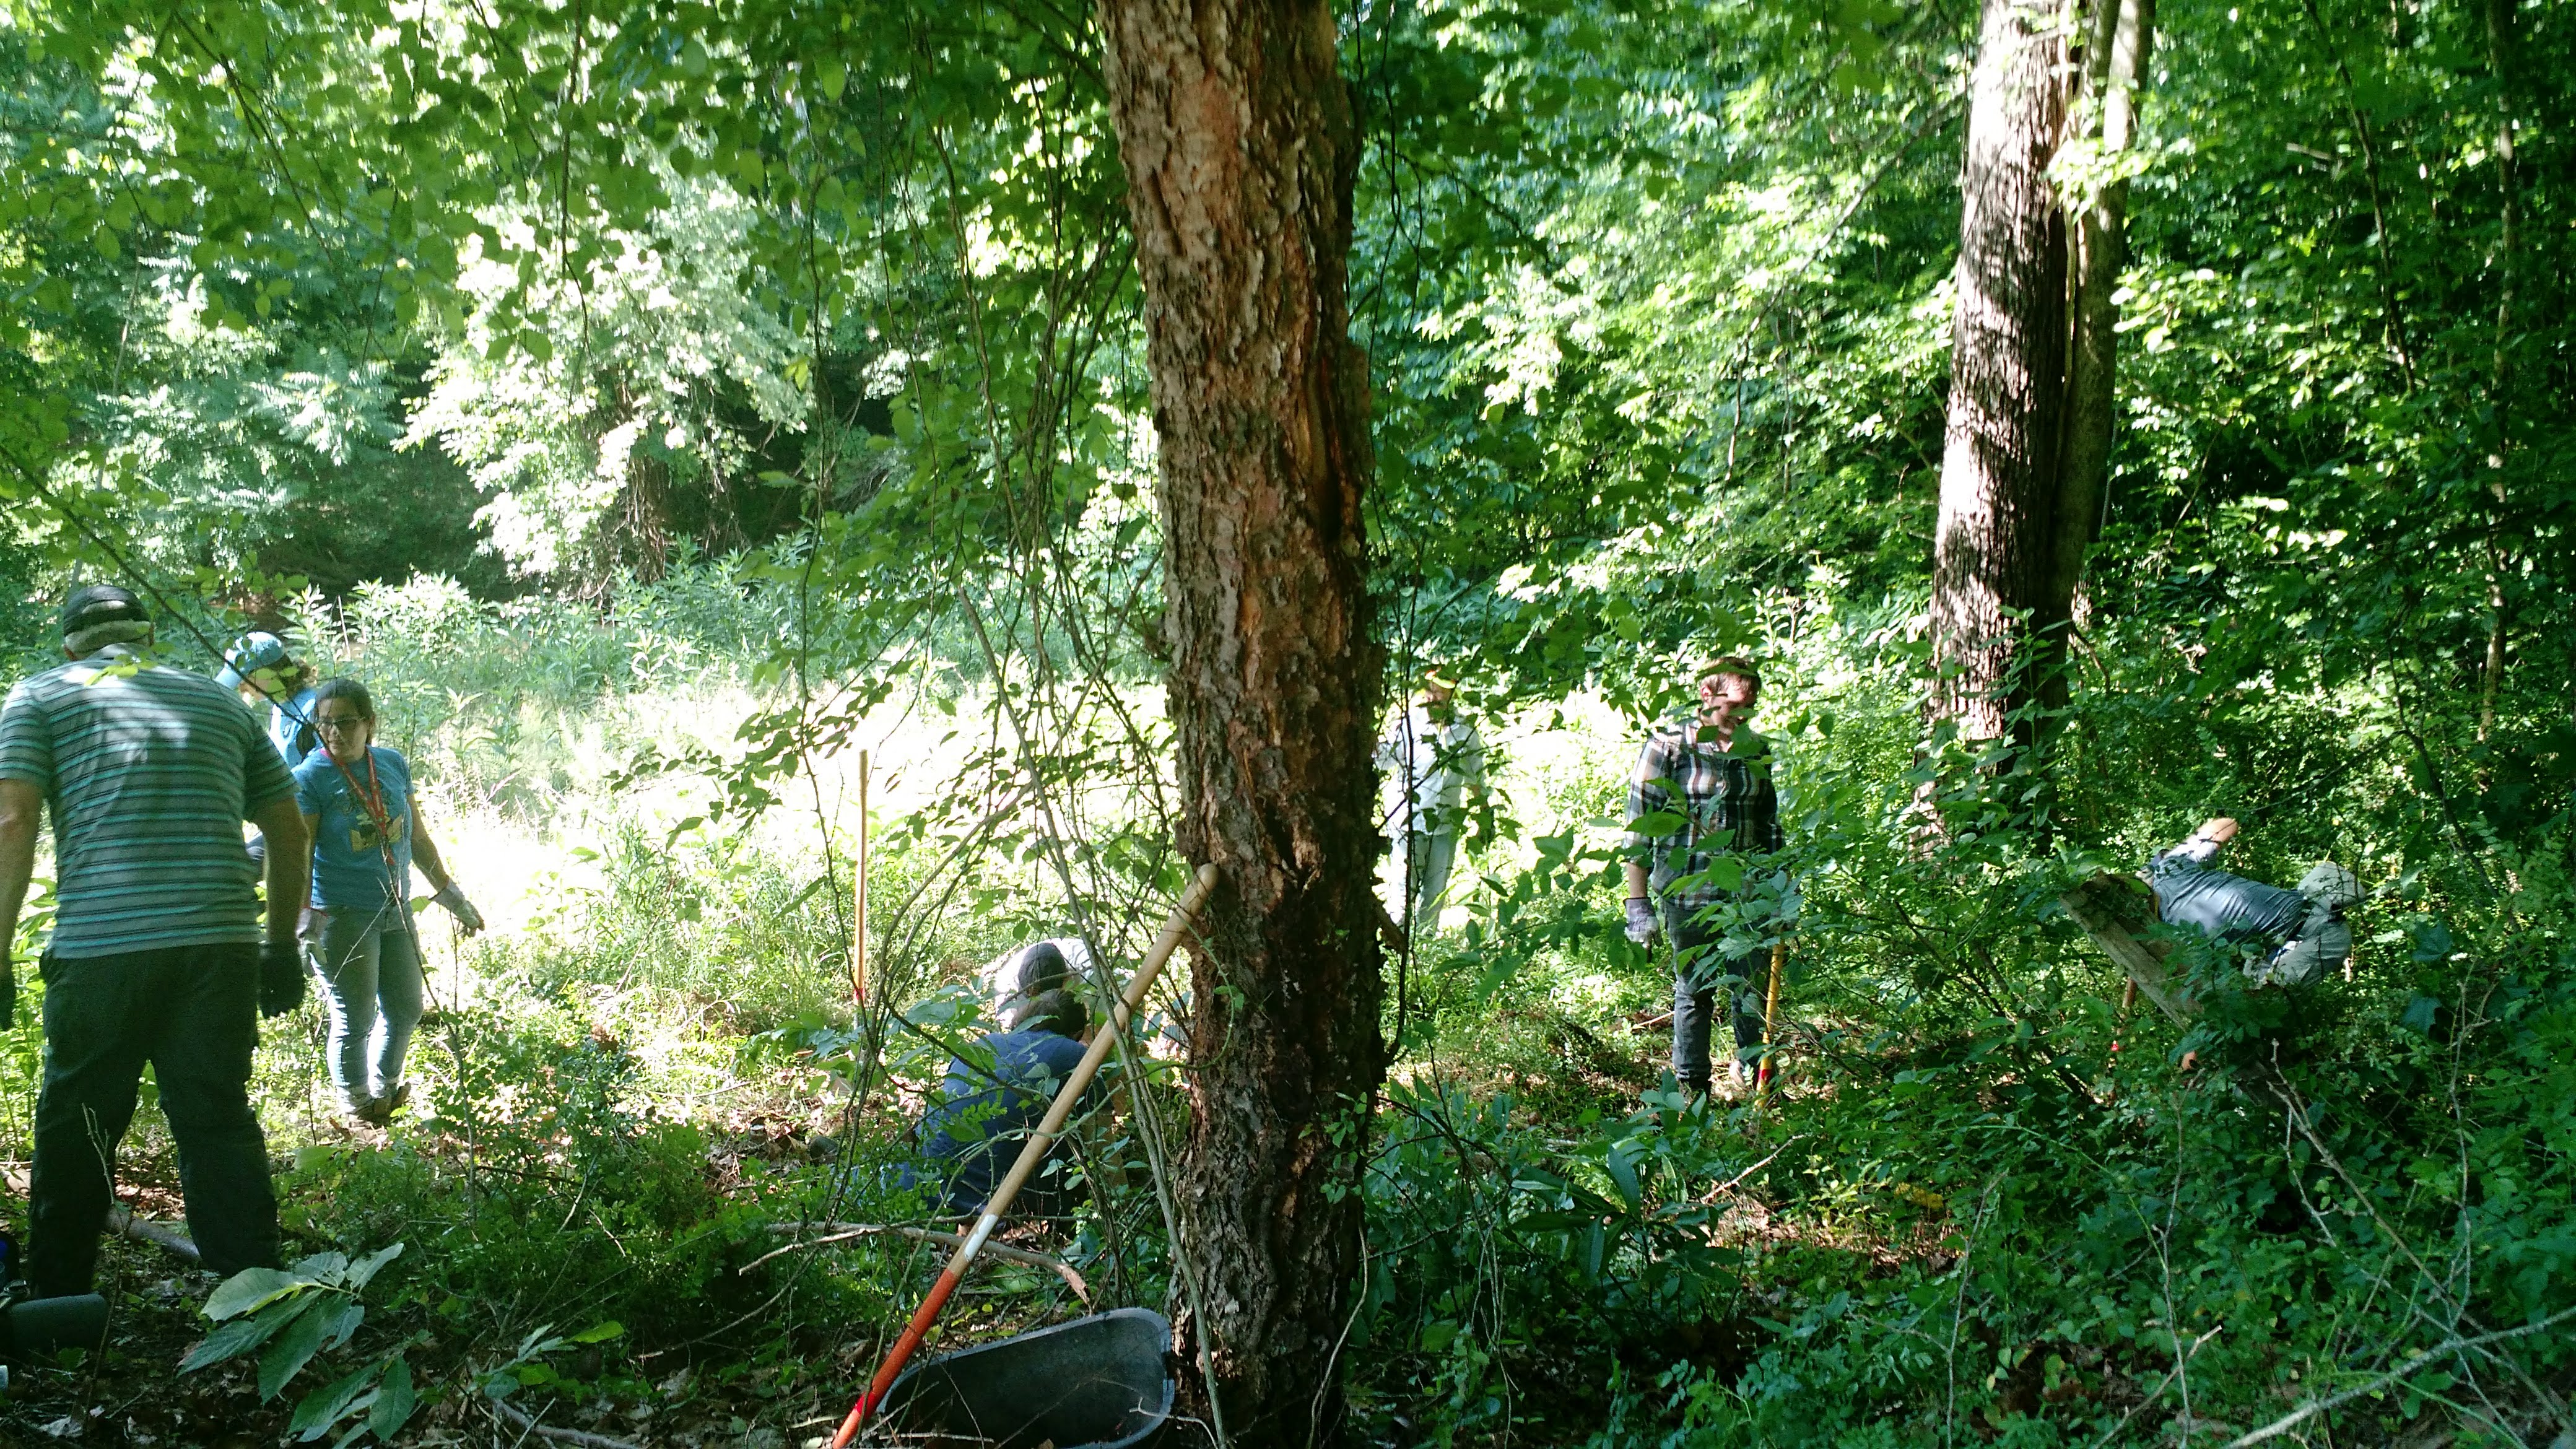 Volunteers removing invasive species and planting native plants.